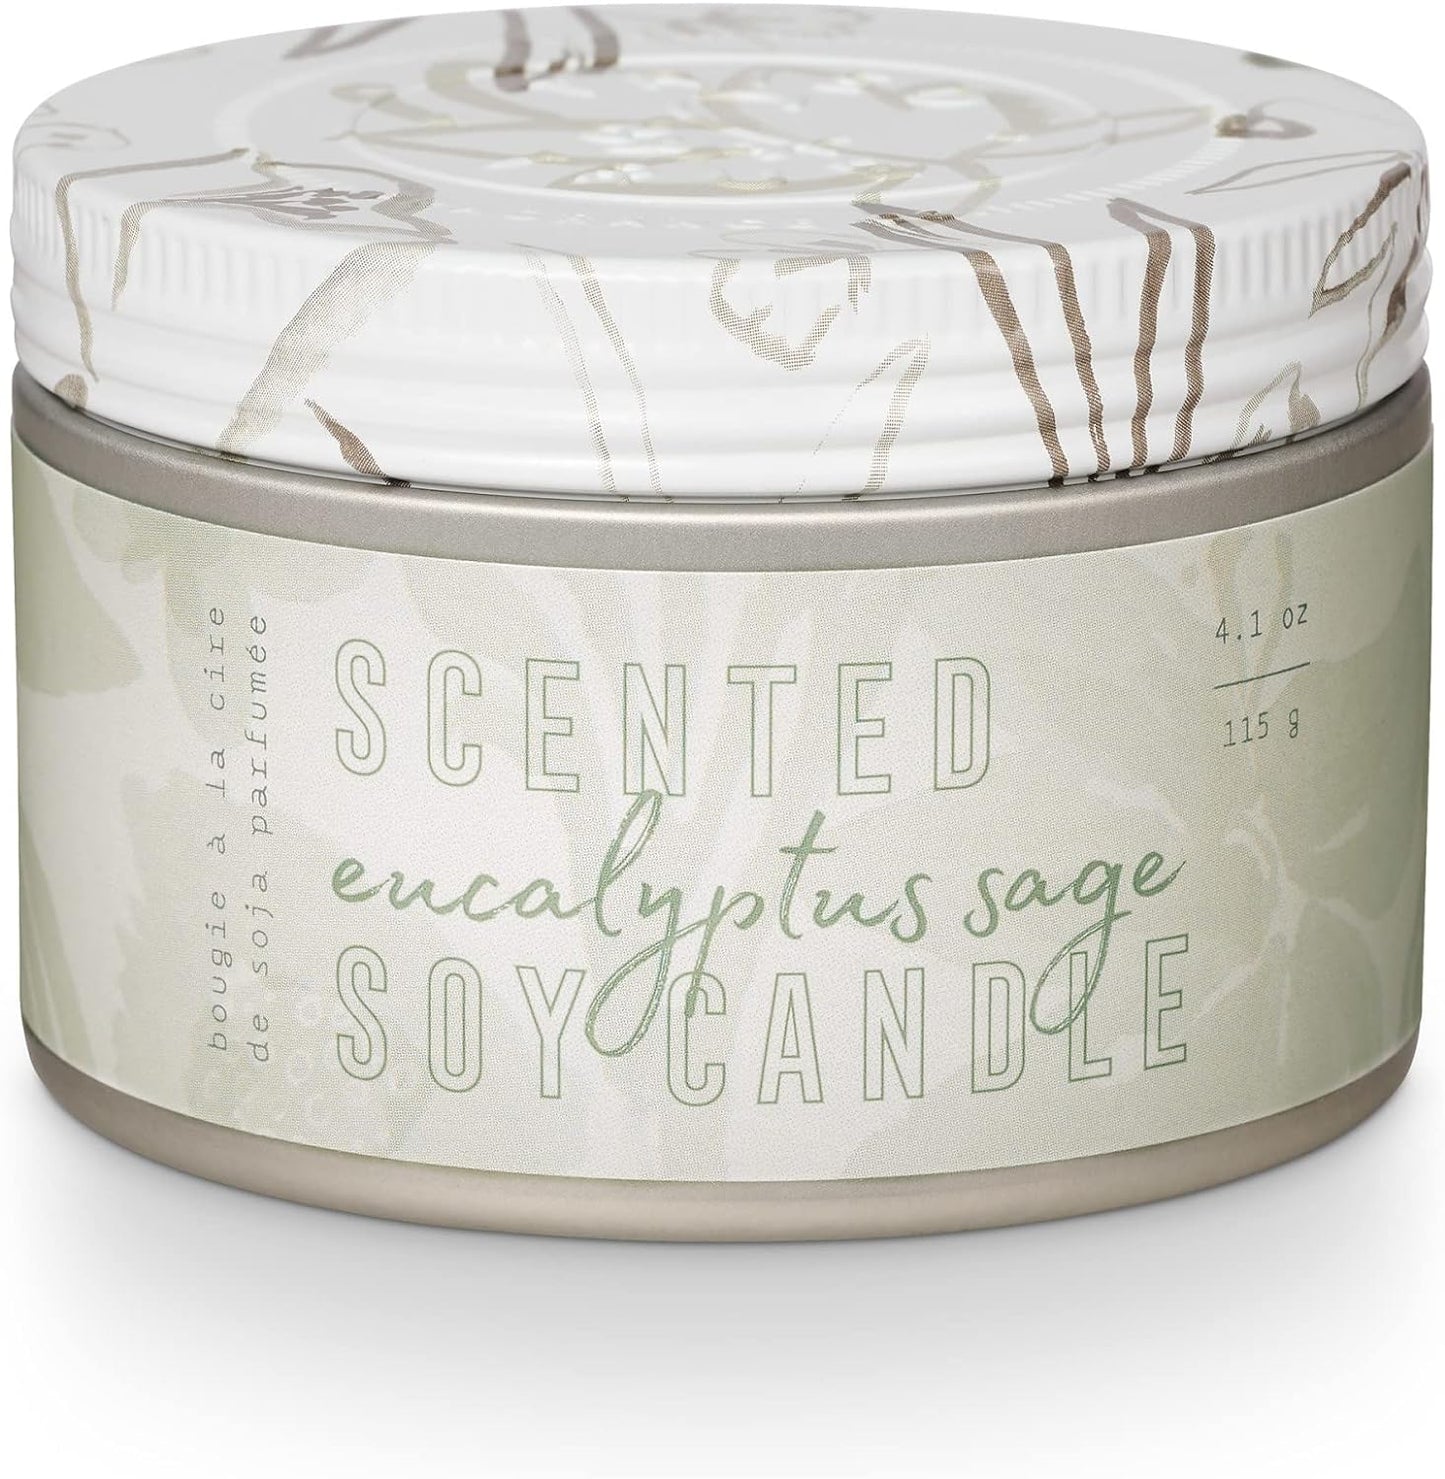 Eucalyptus Sage Tried & True Candle 4.1 oz